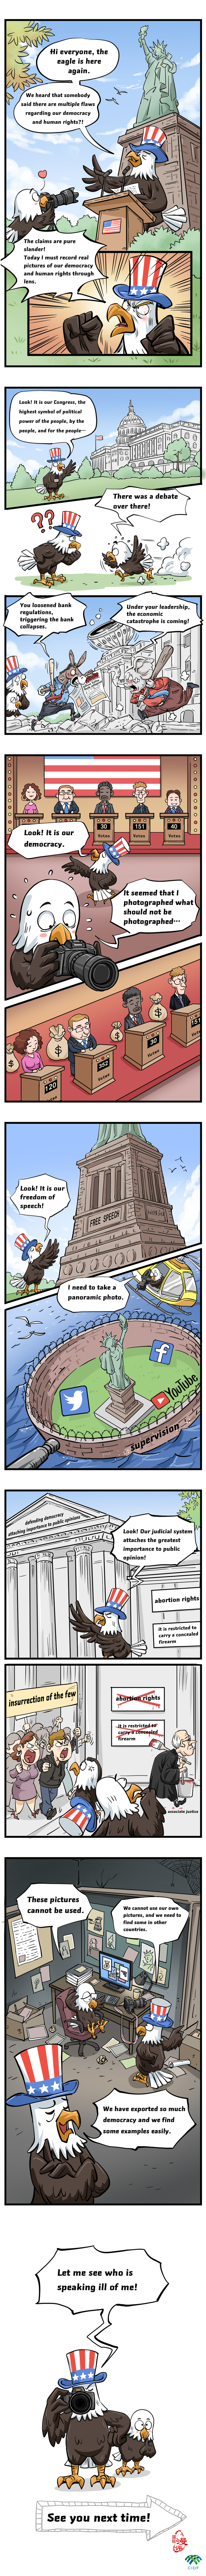 【Editorial Cartoon】Comics | The Facade of American Democracy (1)_fororder_英語